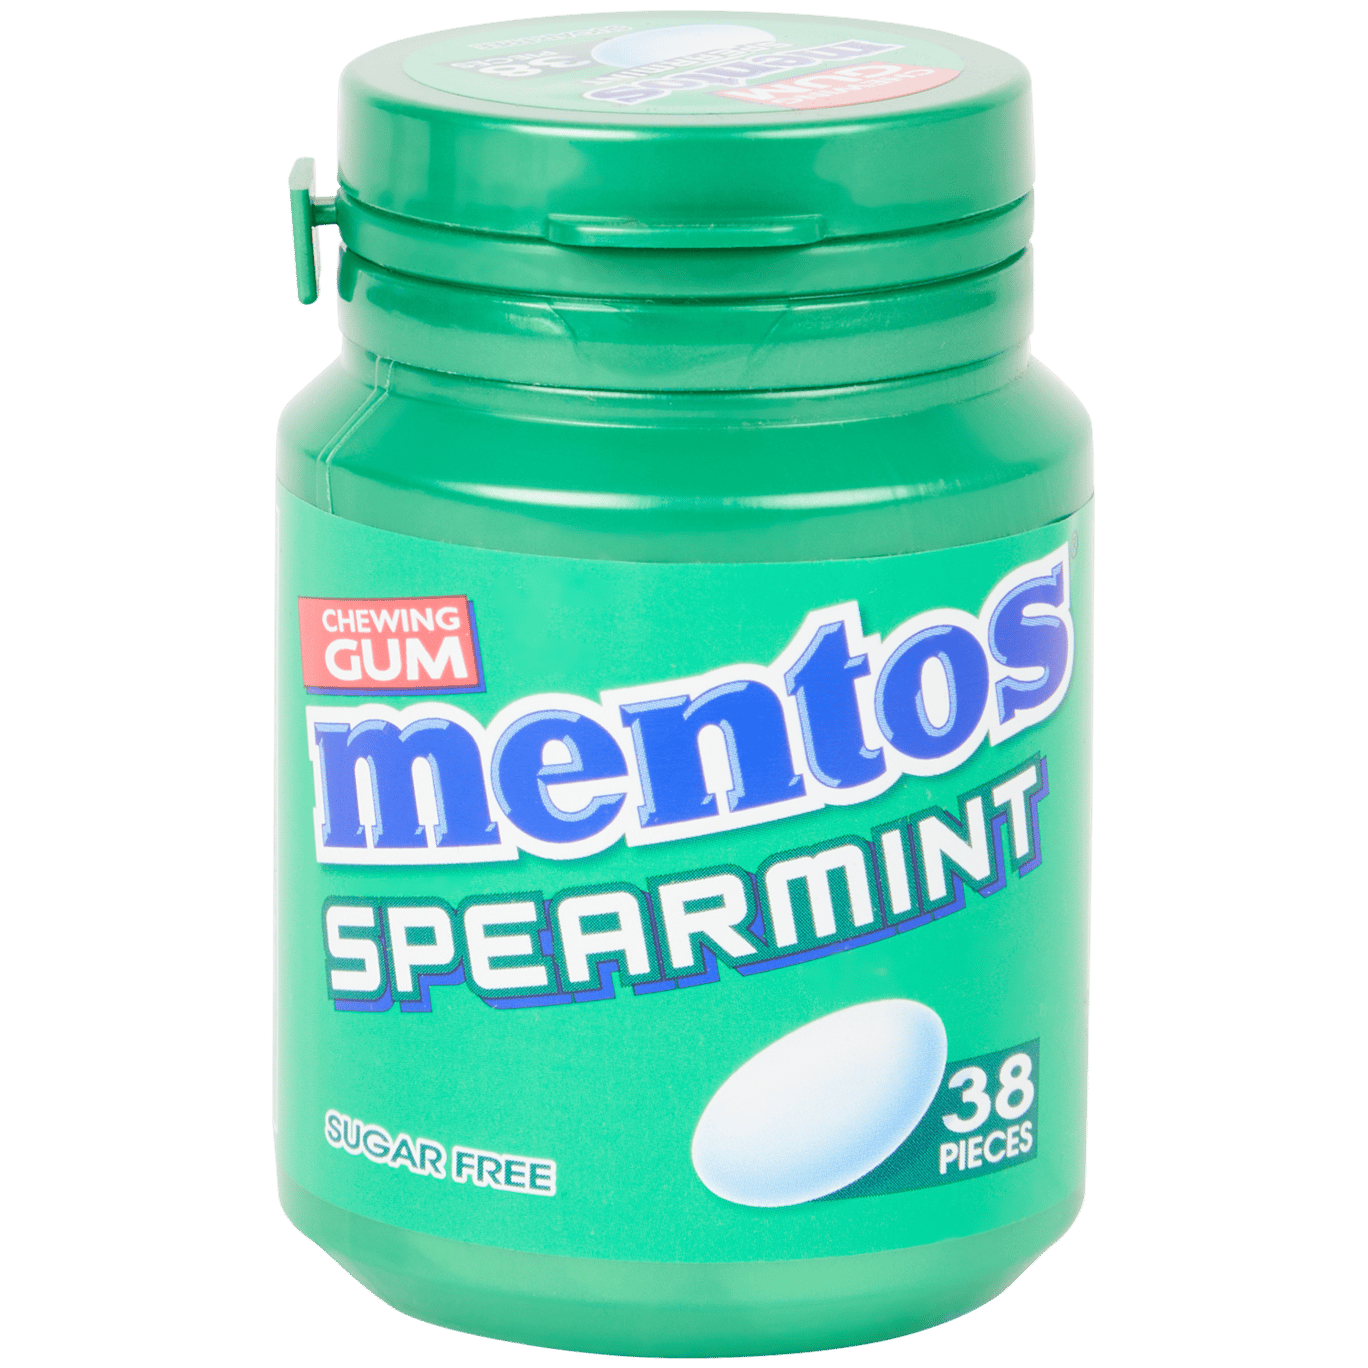 Chewing-gum Mentos Menthe verte